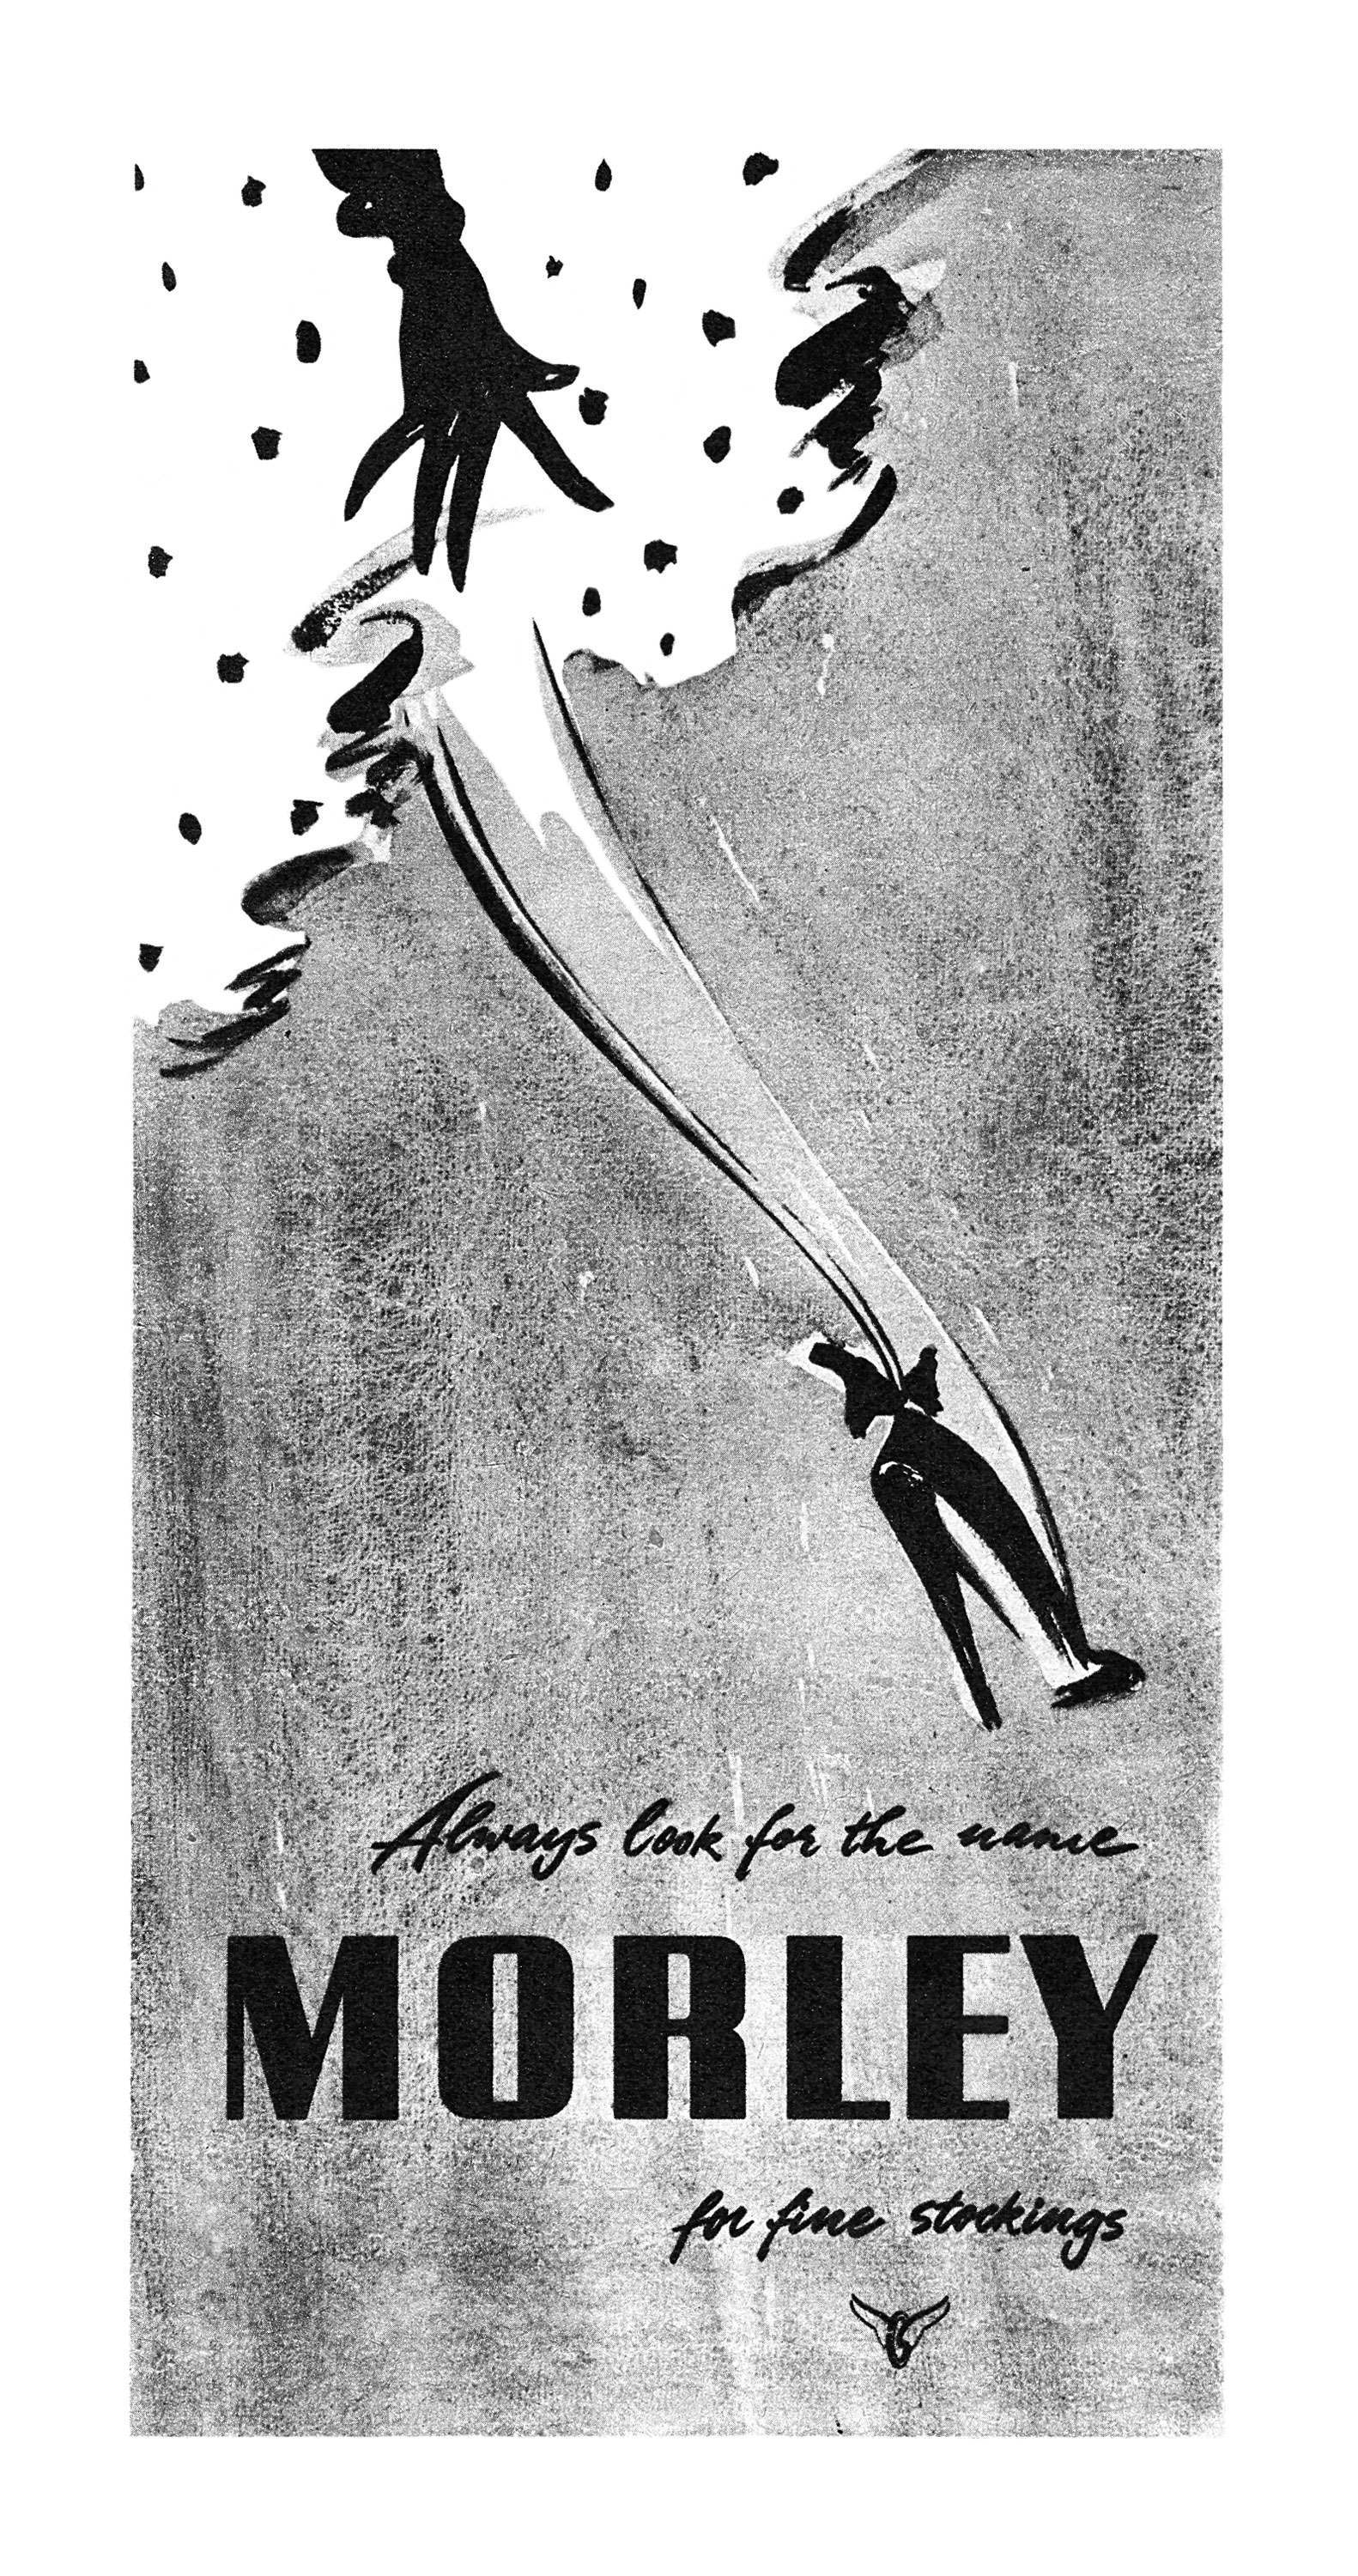 1951 Morley Stockings ad